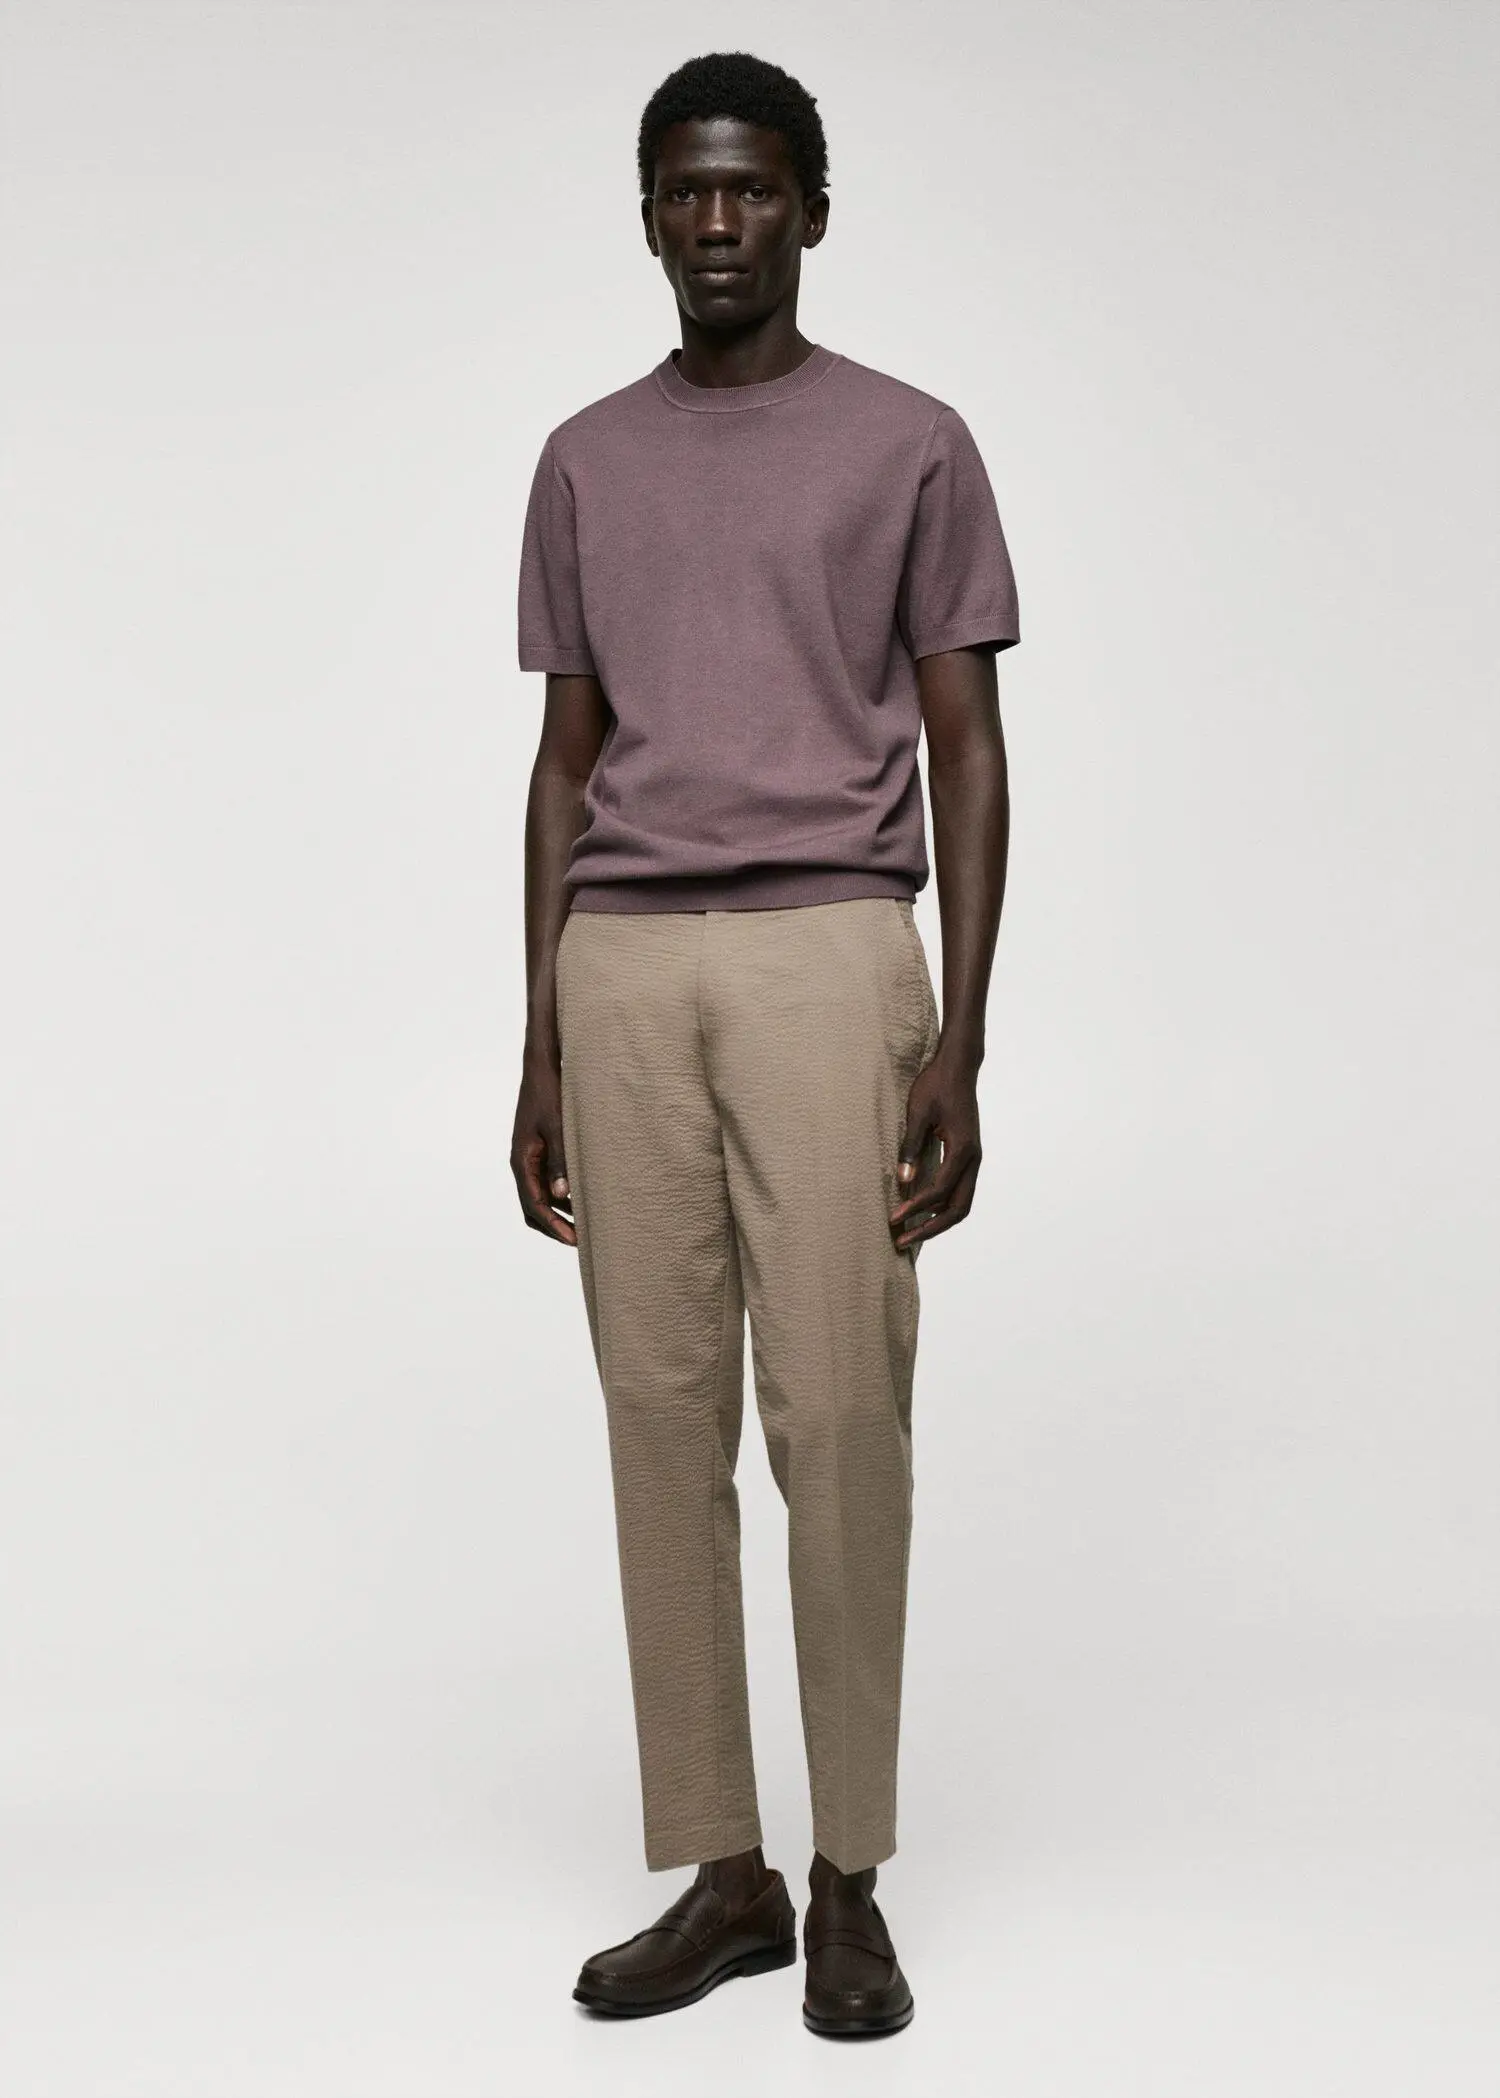 Mango Fine-knit T-shirt. a man in a purple shirt and beige pants. 